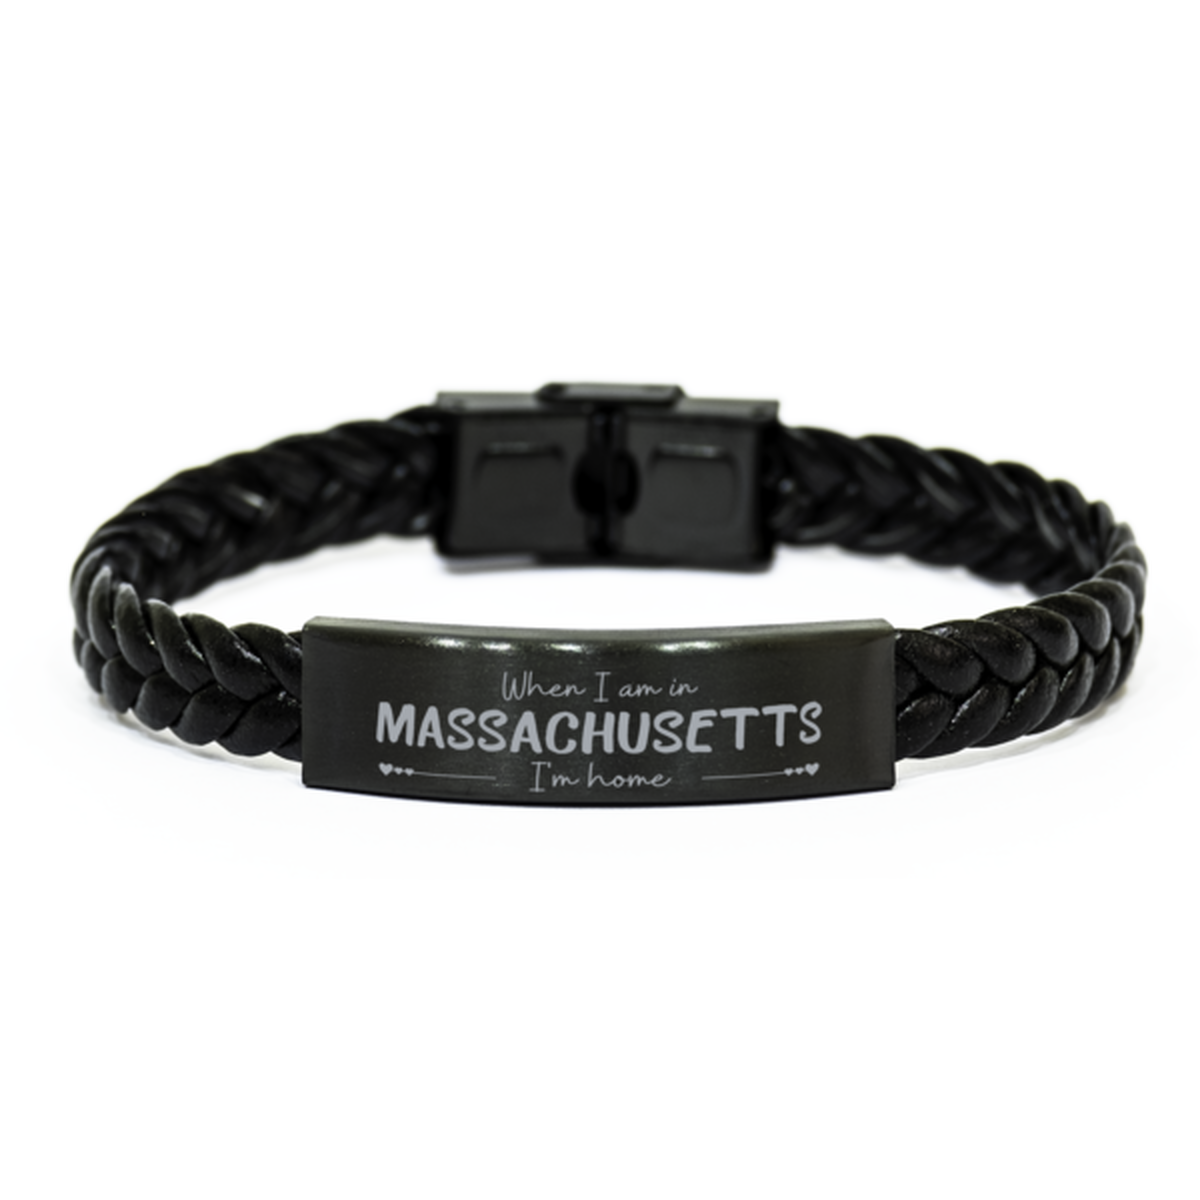 When I am in Massachusetts I'm home Braided Leather Bracelet, Cheap Gifts For Massachusetts, State Massachusetts Birthday Gifts for Friends Coworker